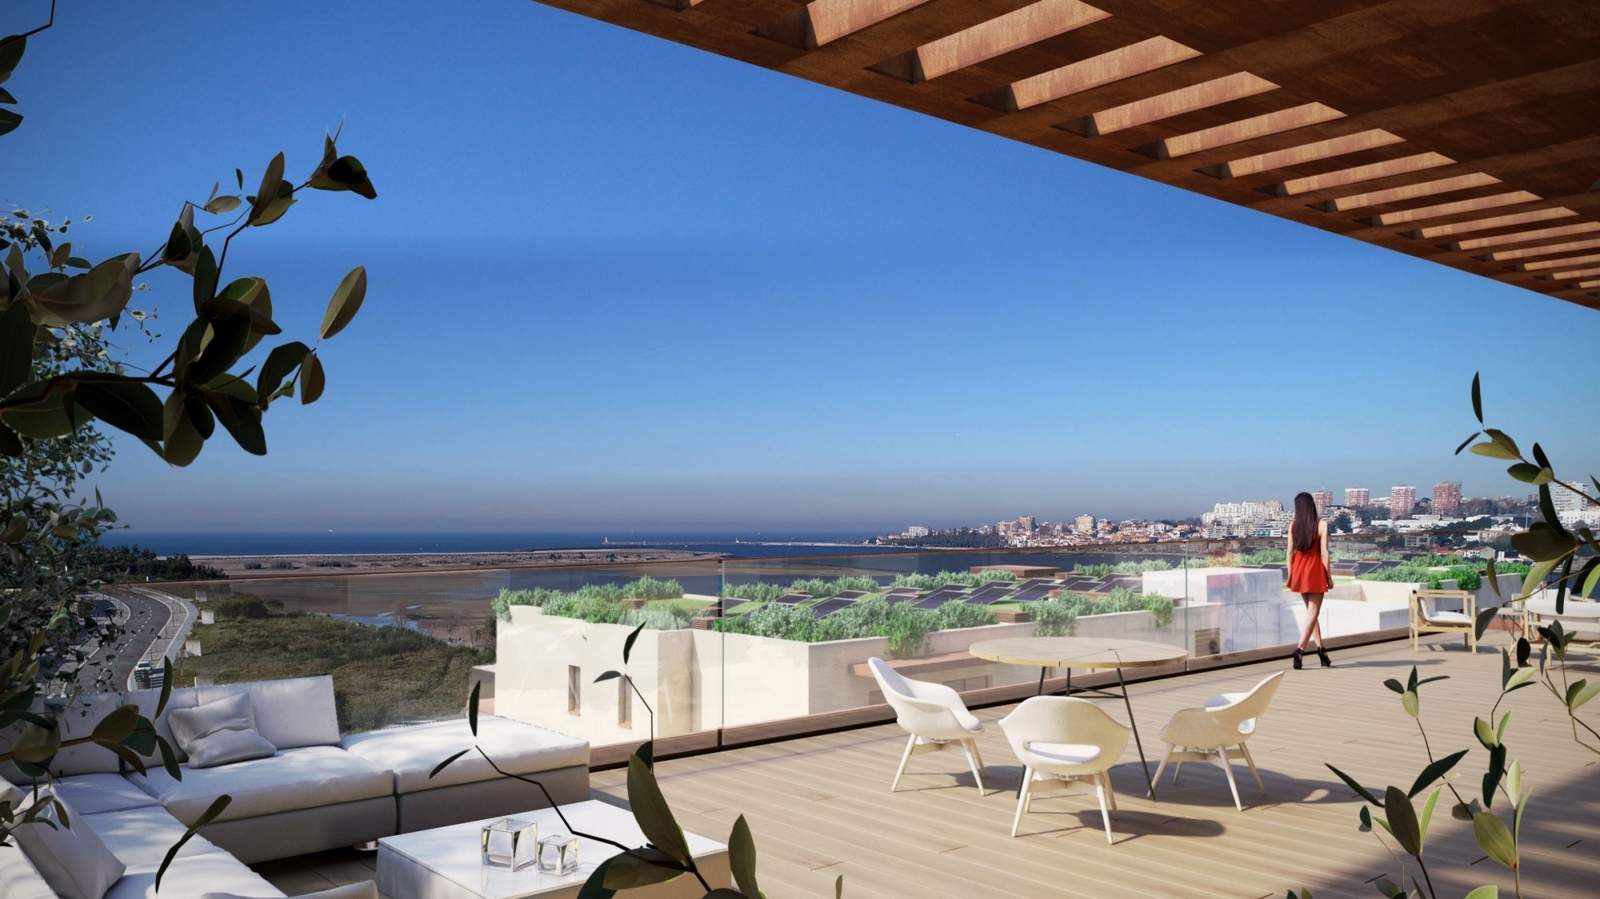 Apartment for sale with terrace, in exclusive condominium, V. N. Gaia, Porto, Portugal_175441